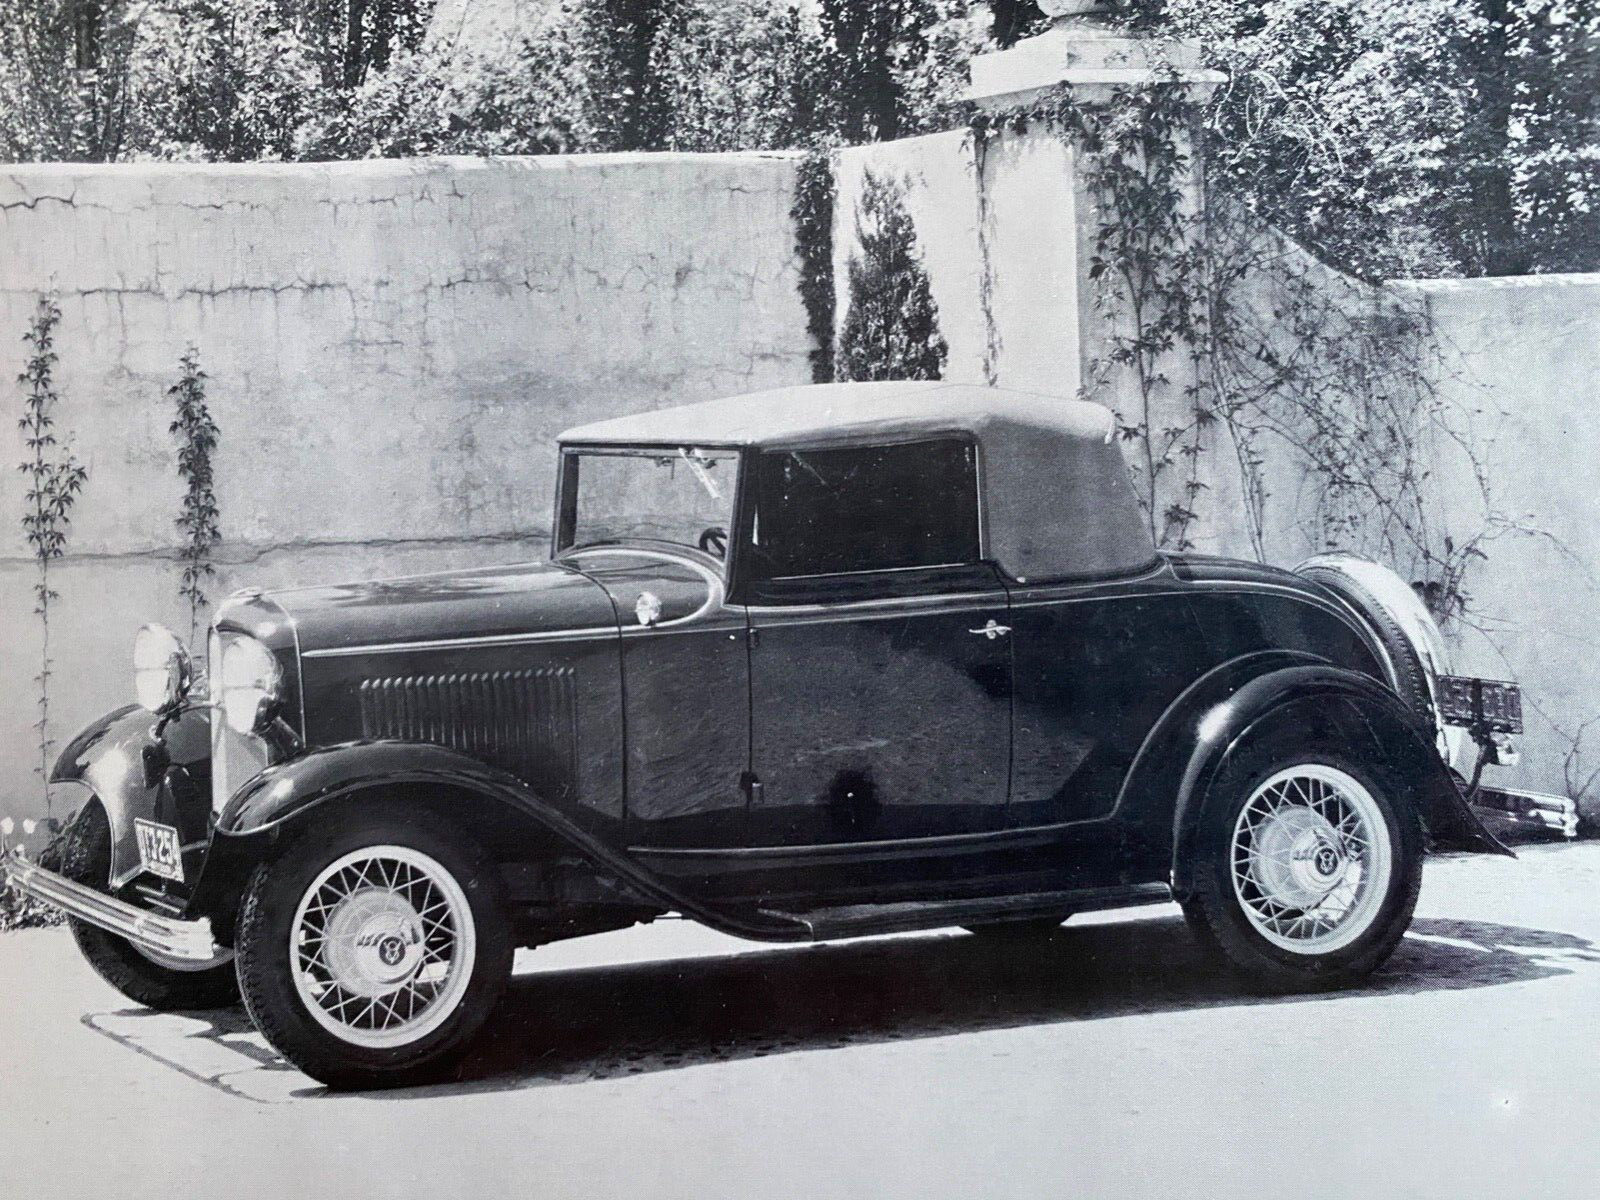 1932 FORD SPORT COUPE vintage automobile photograph MODEL B CAR - 6.75